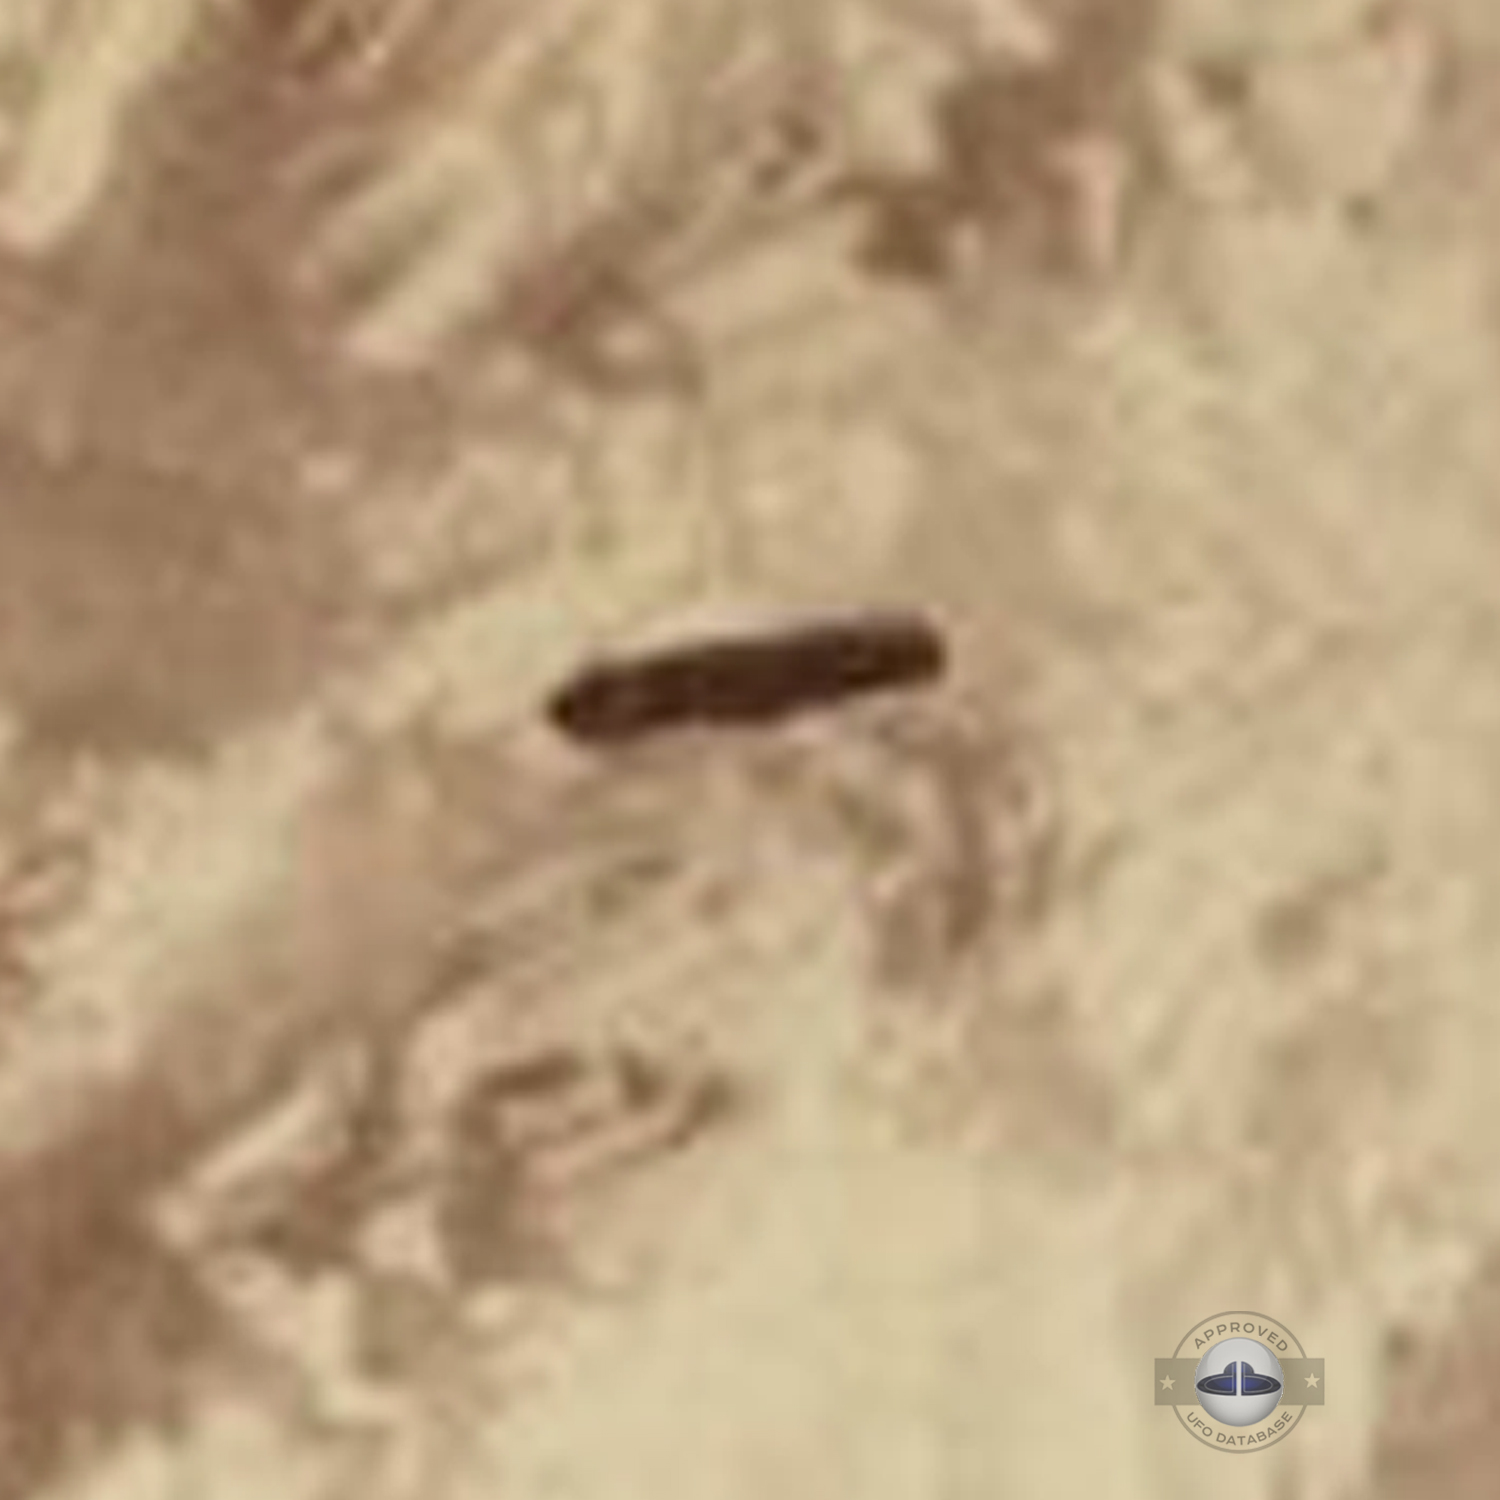 Oldest UFO Picture | Winter 1870 | Mount Washington, New Hampshire UFO Picture #110-6